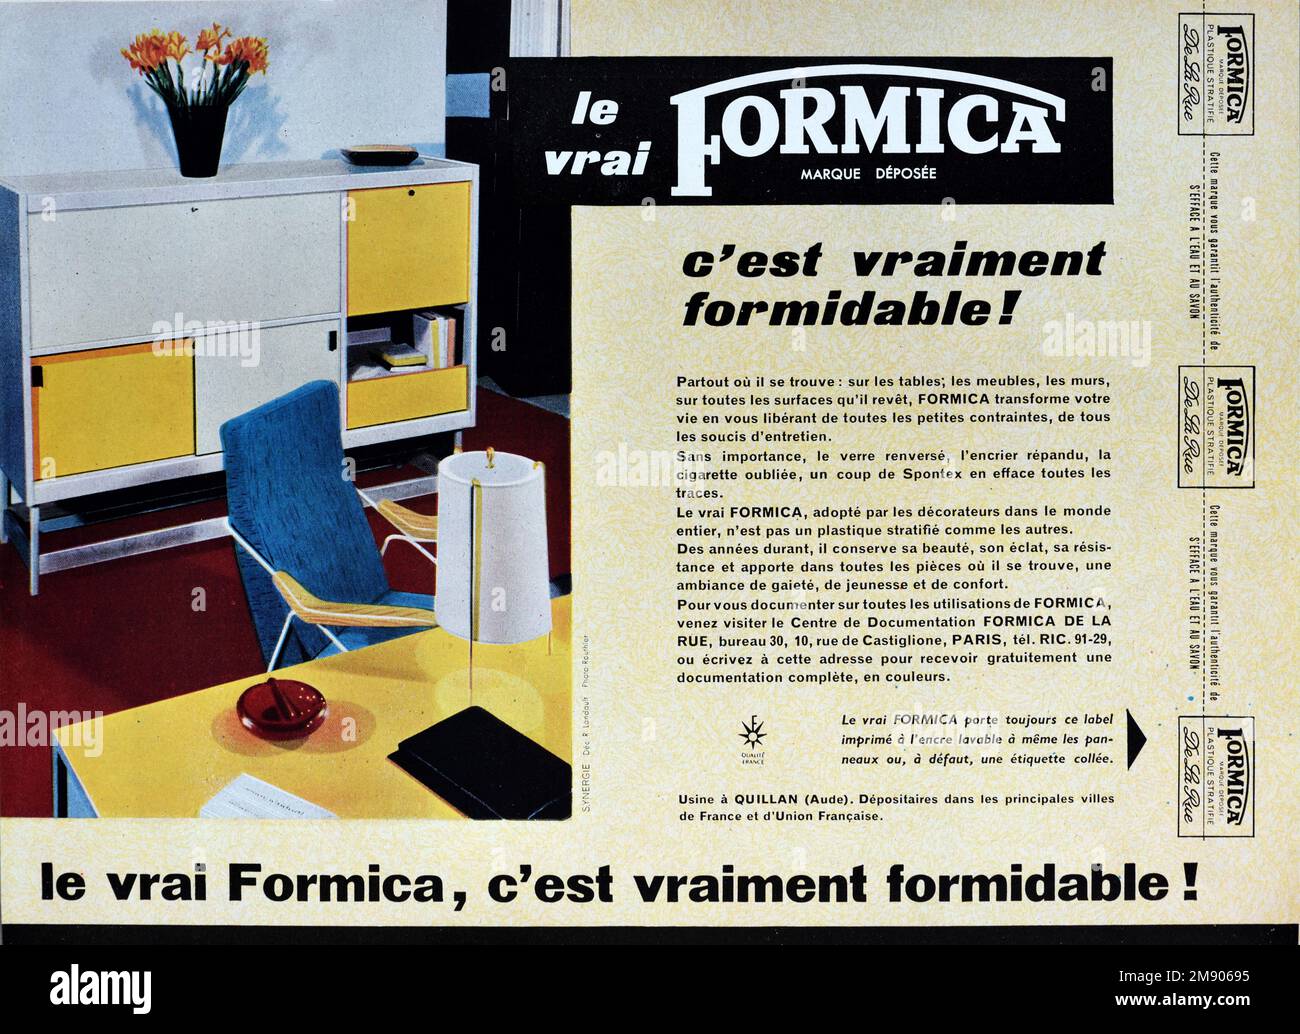 Vintage or Old Advert, Advertisement, Publicity or Illustration for 1950s Formica Furniture including 1950s Desk, Office or Living Room 1957 Advert Stock Photo